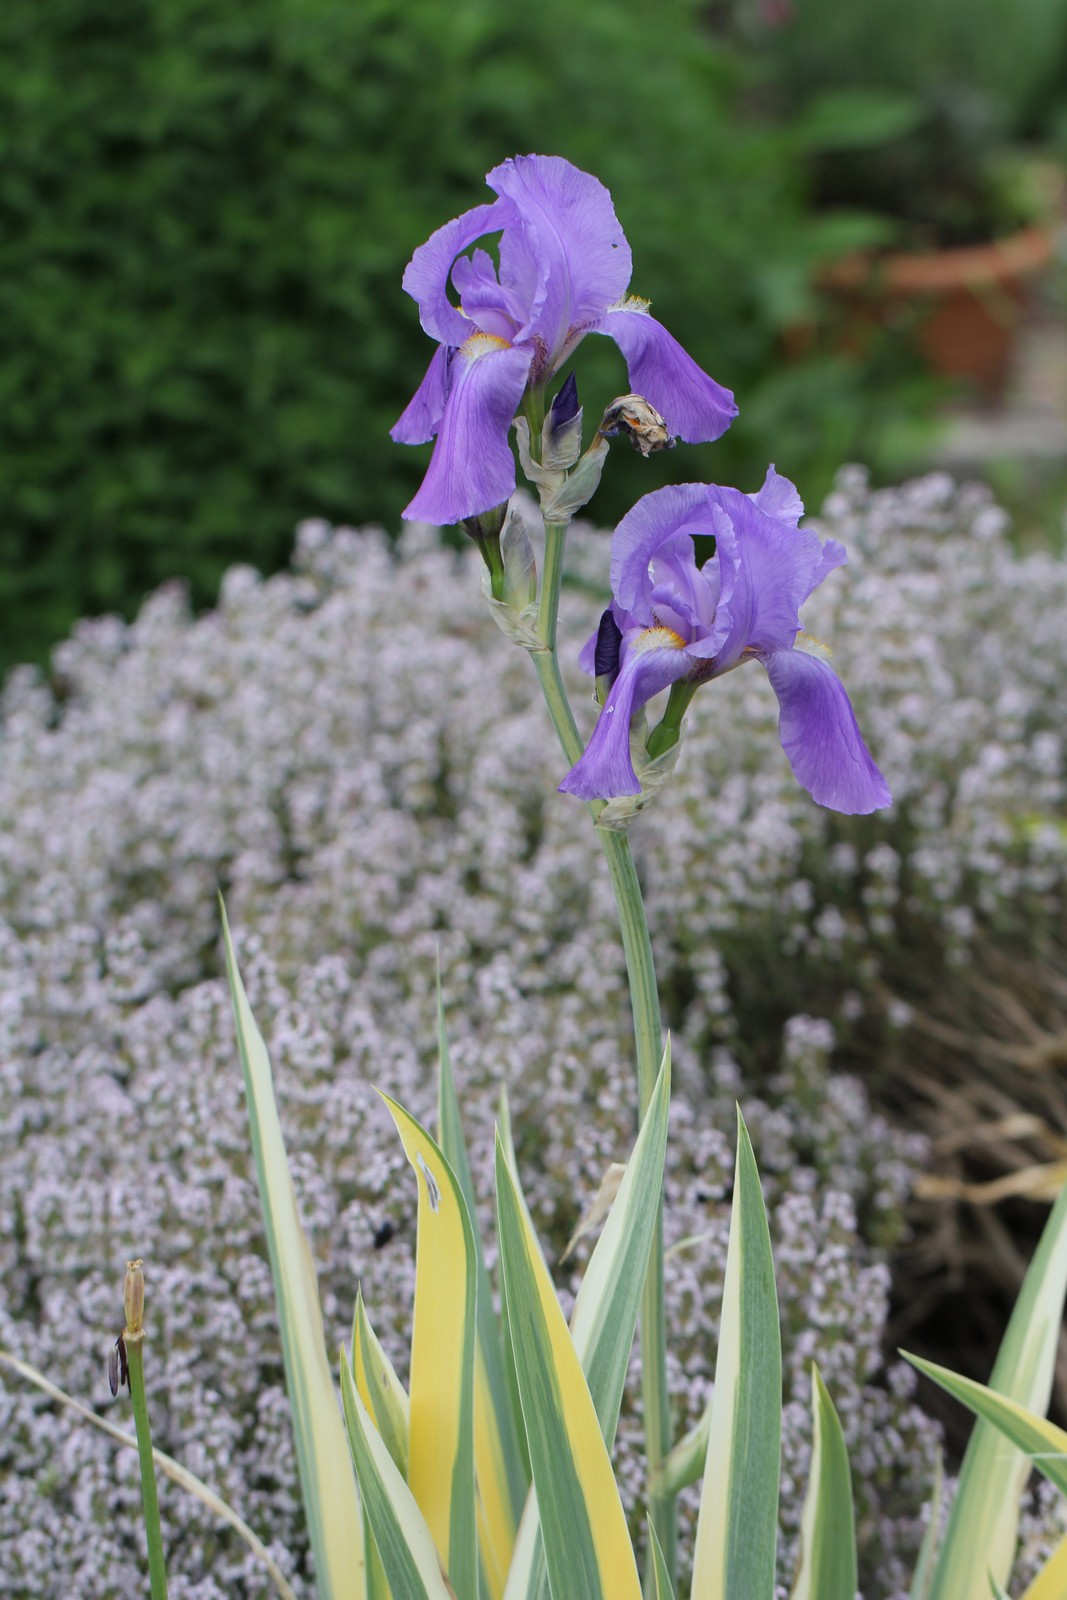 Iris pallida ‘Variegata’